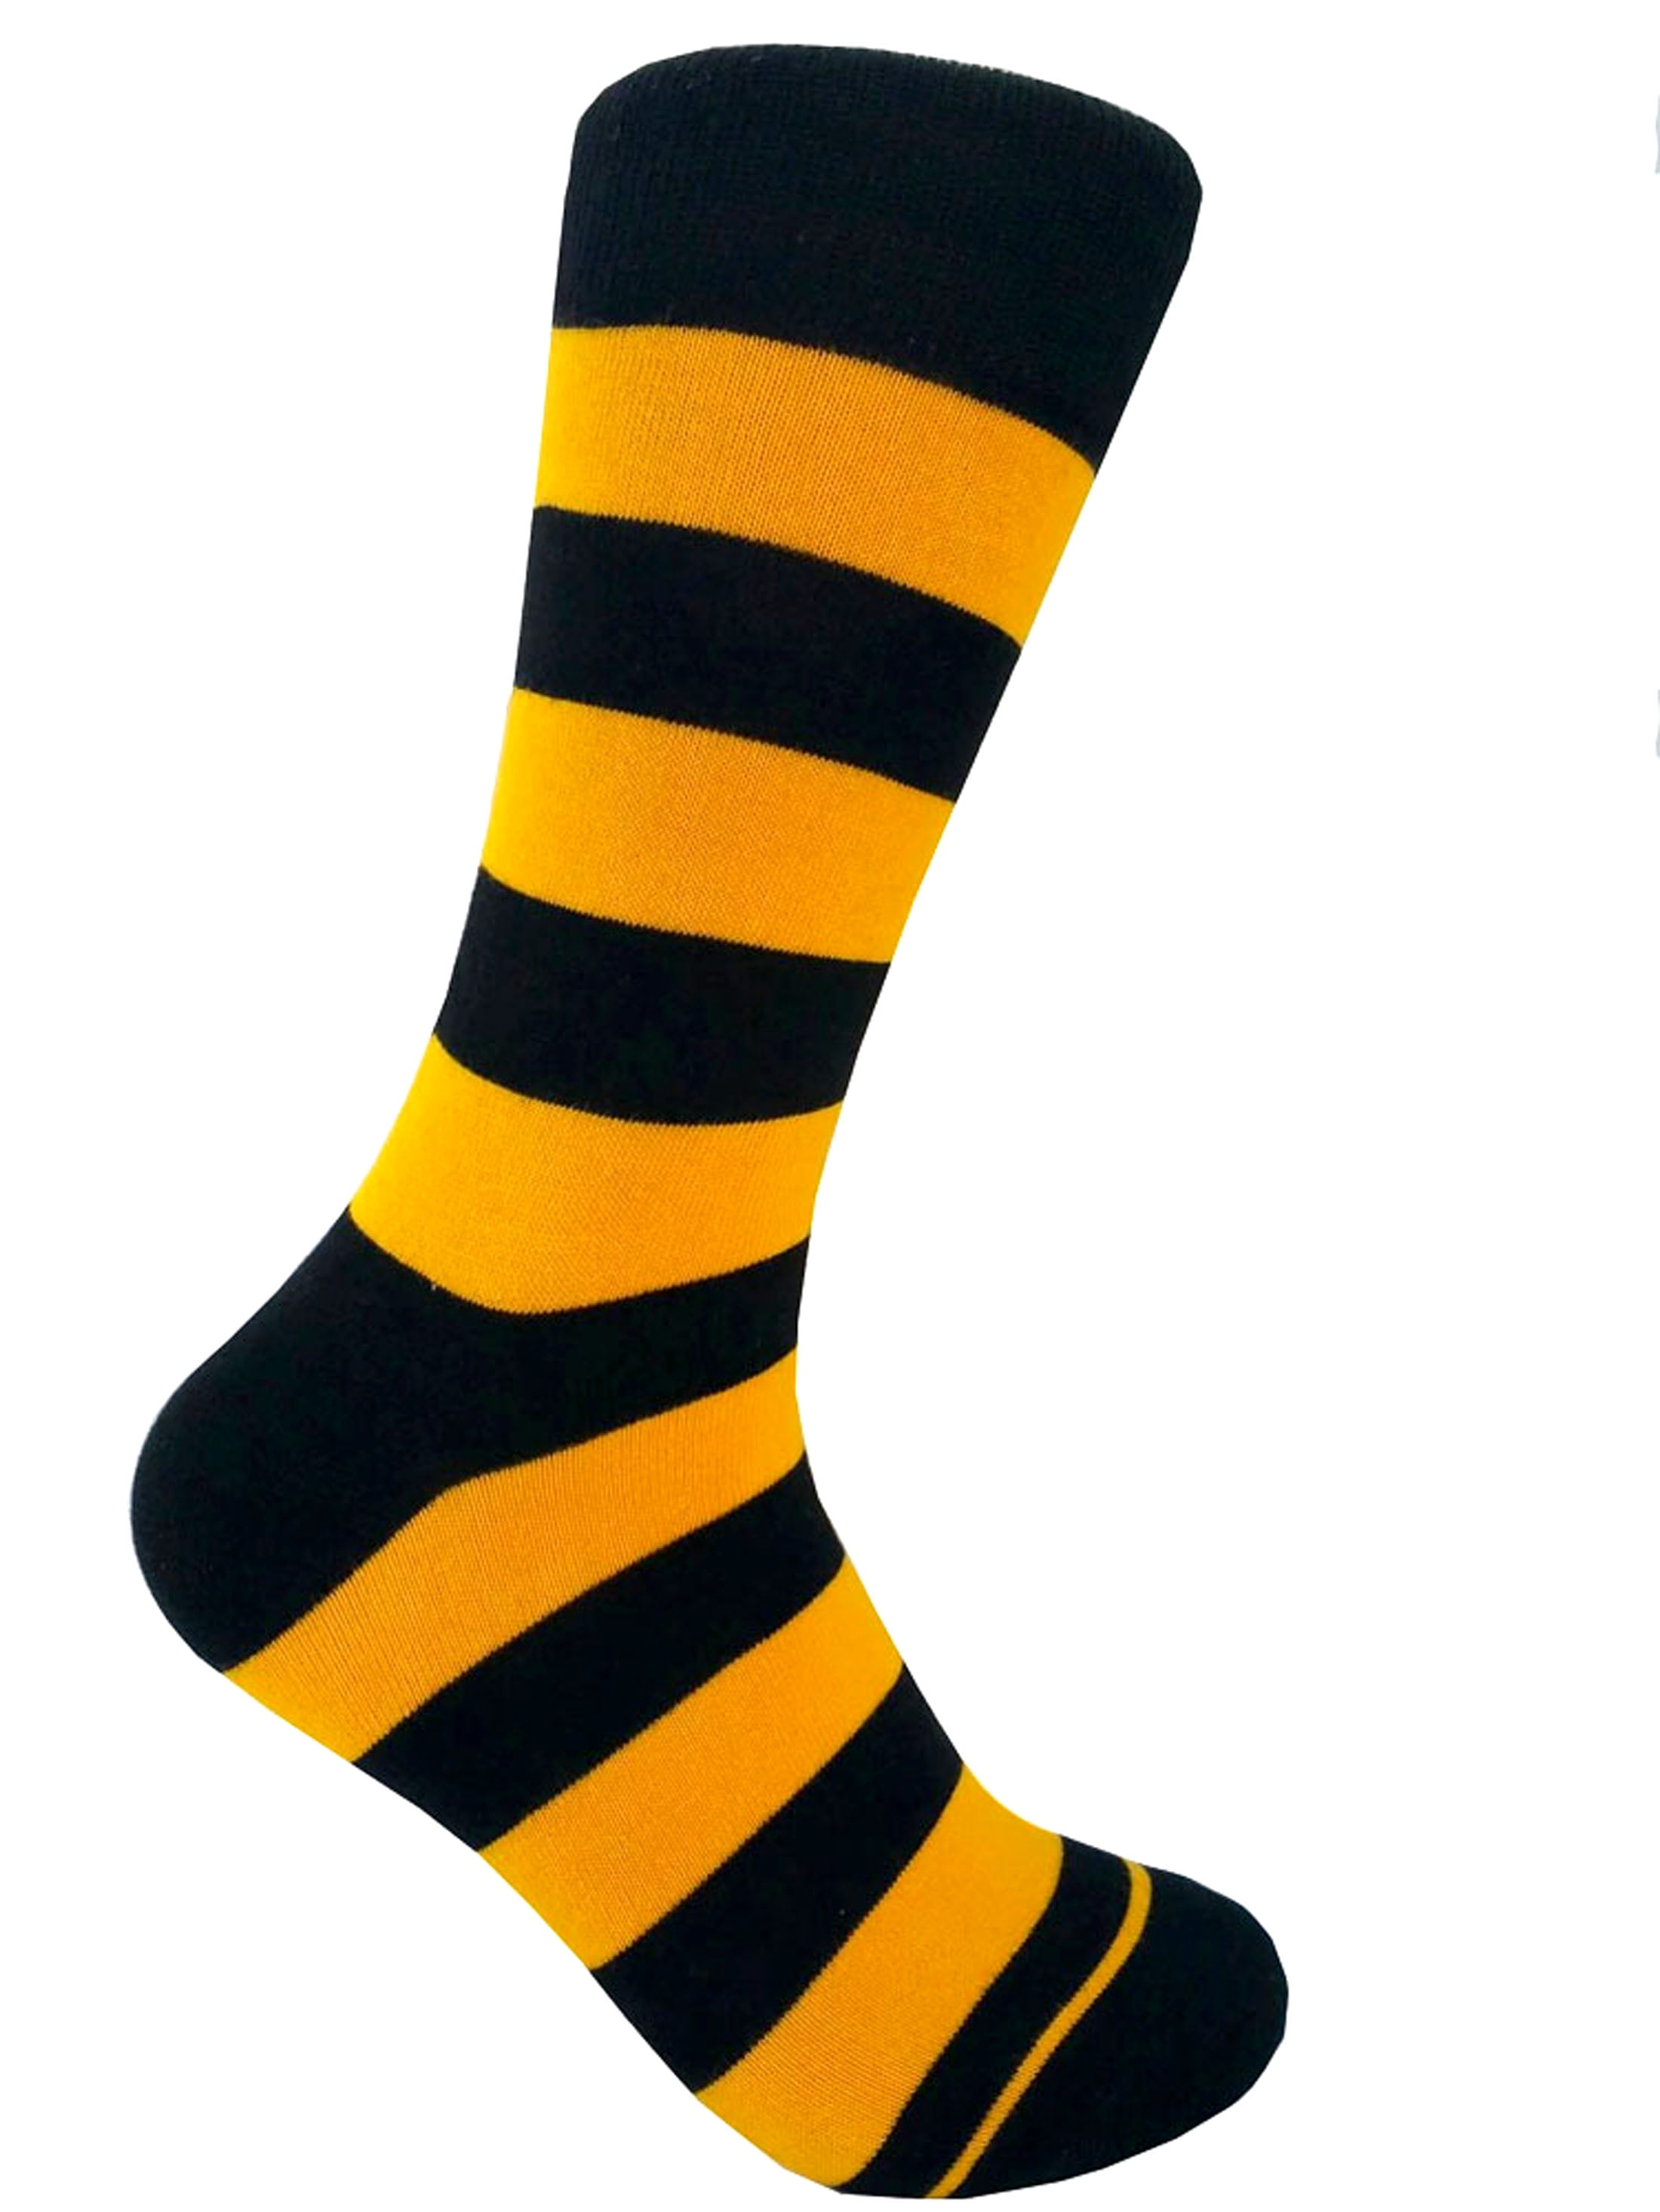 Black with Gold Yellow Color Stripes(Zebra Stripes)Dress Casual Socks ...